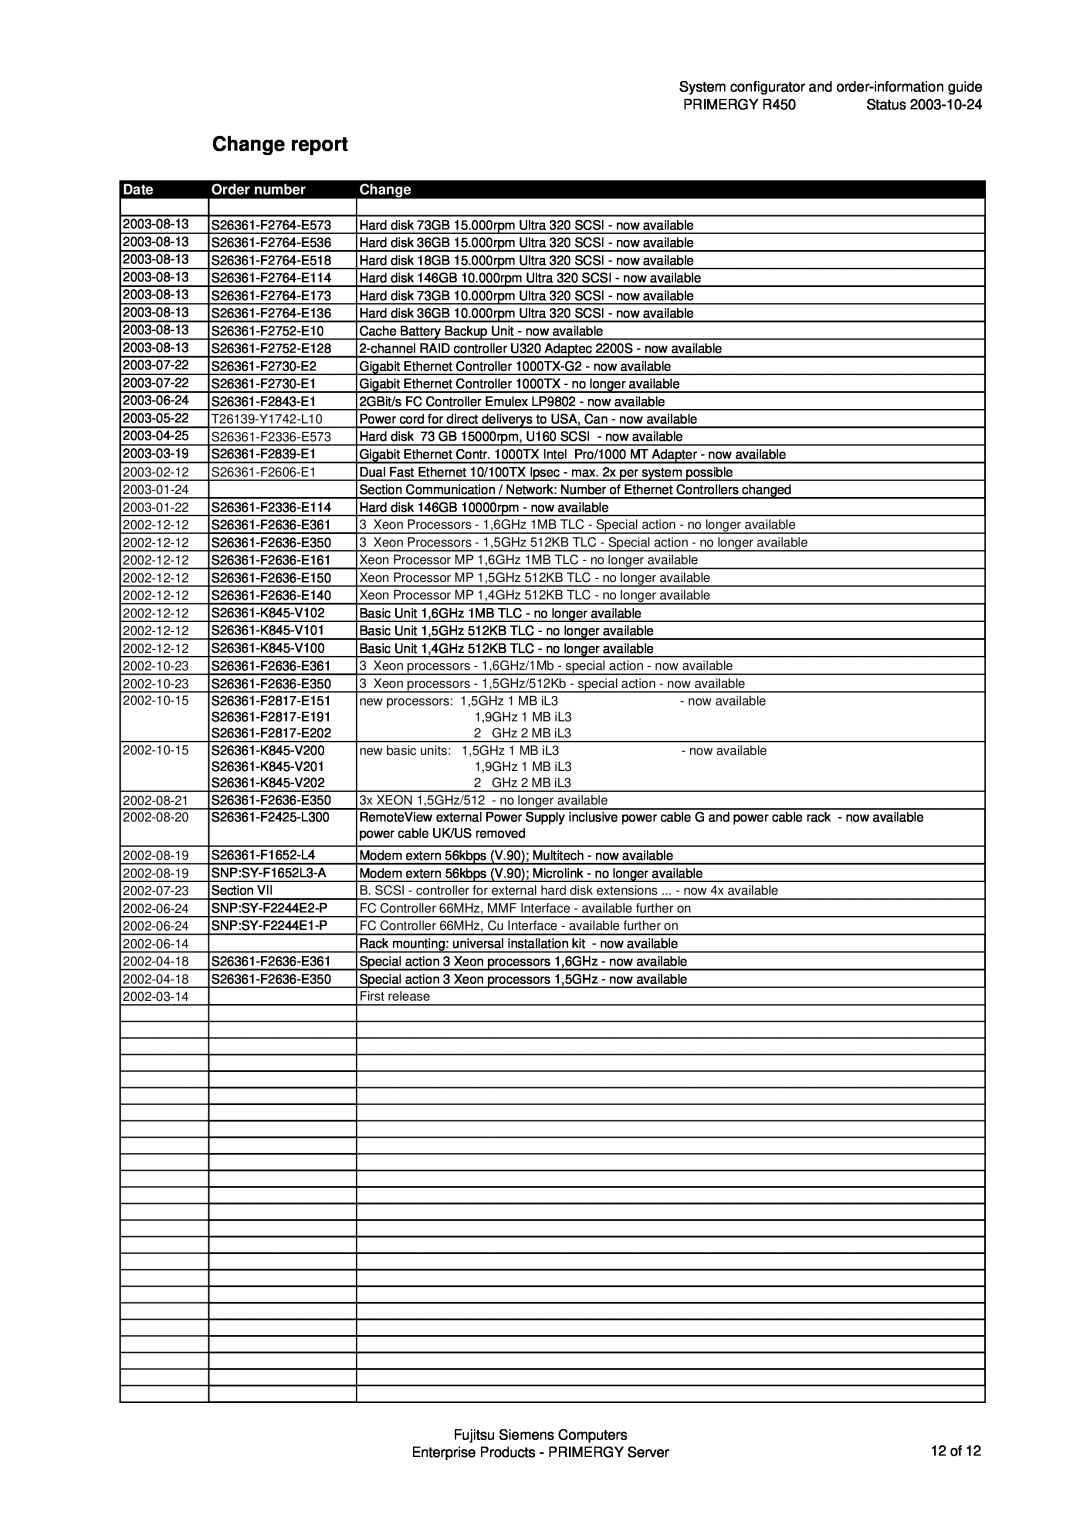 Fujitsu manual Change report, System configurator and order-information guide, PRIMERGY R450, Date, Order number 